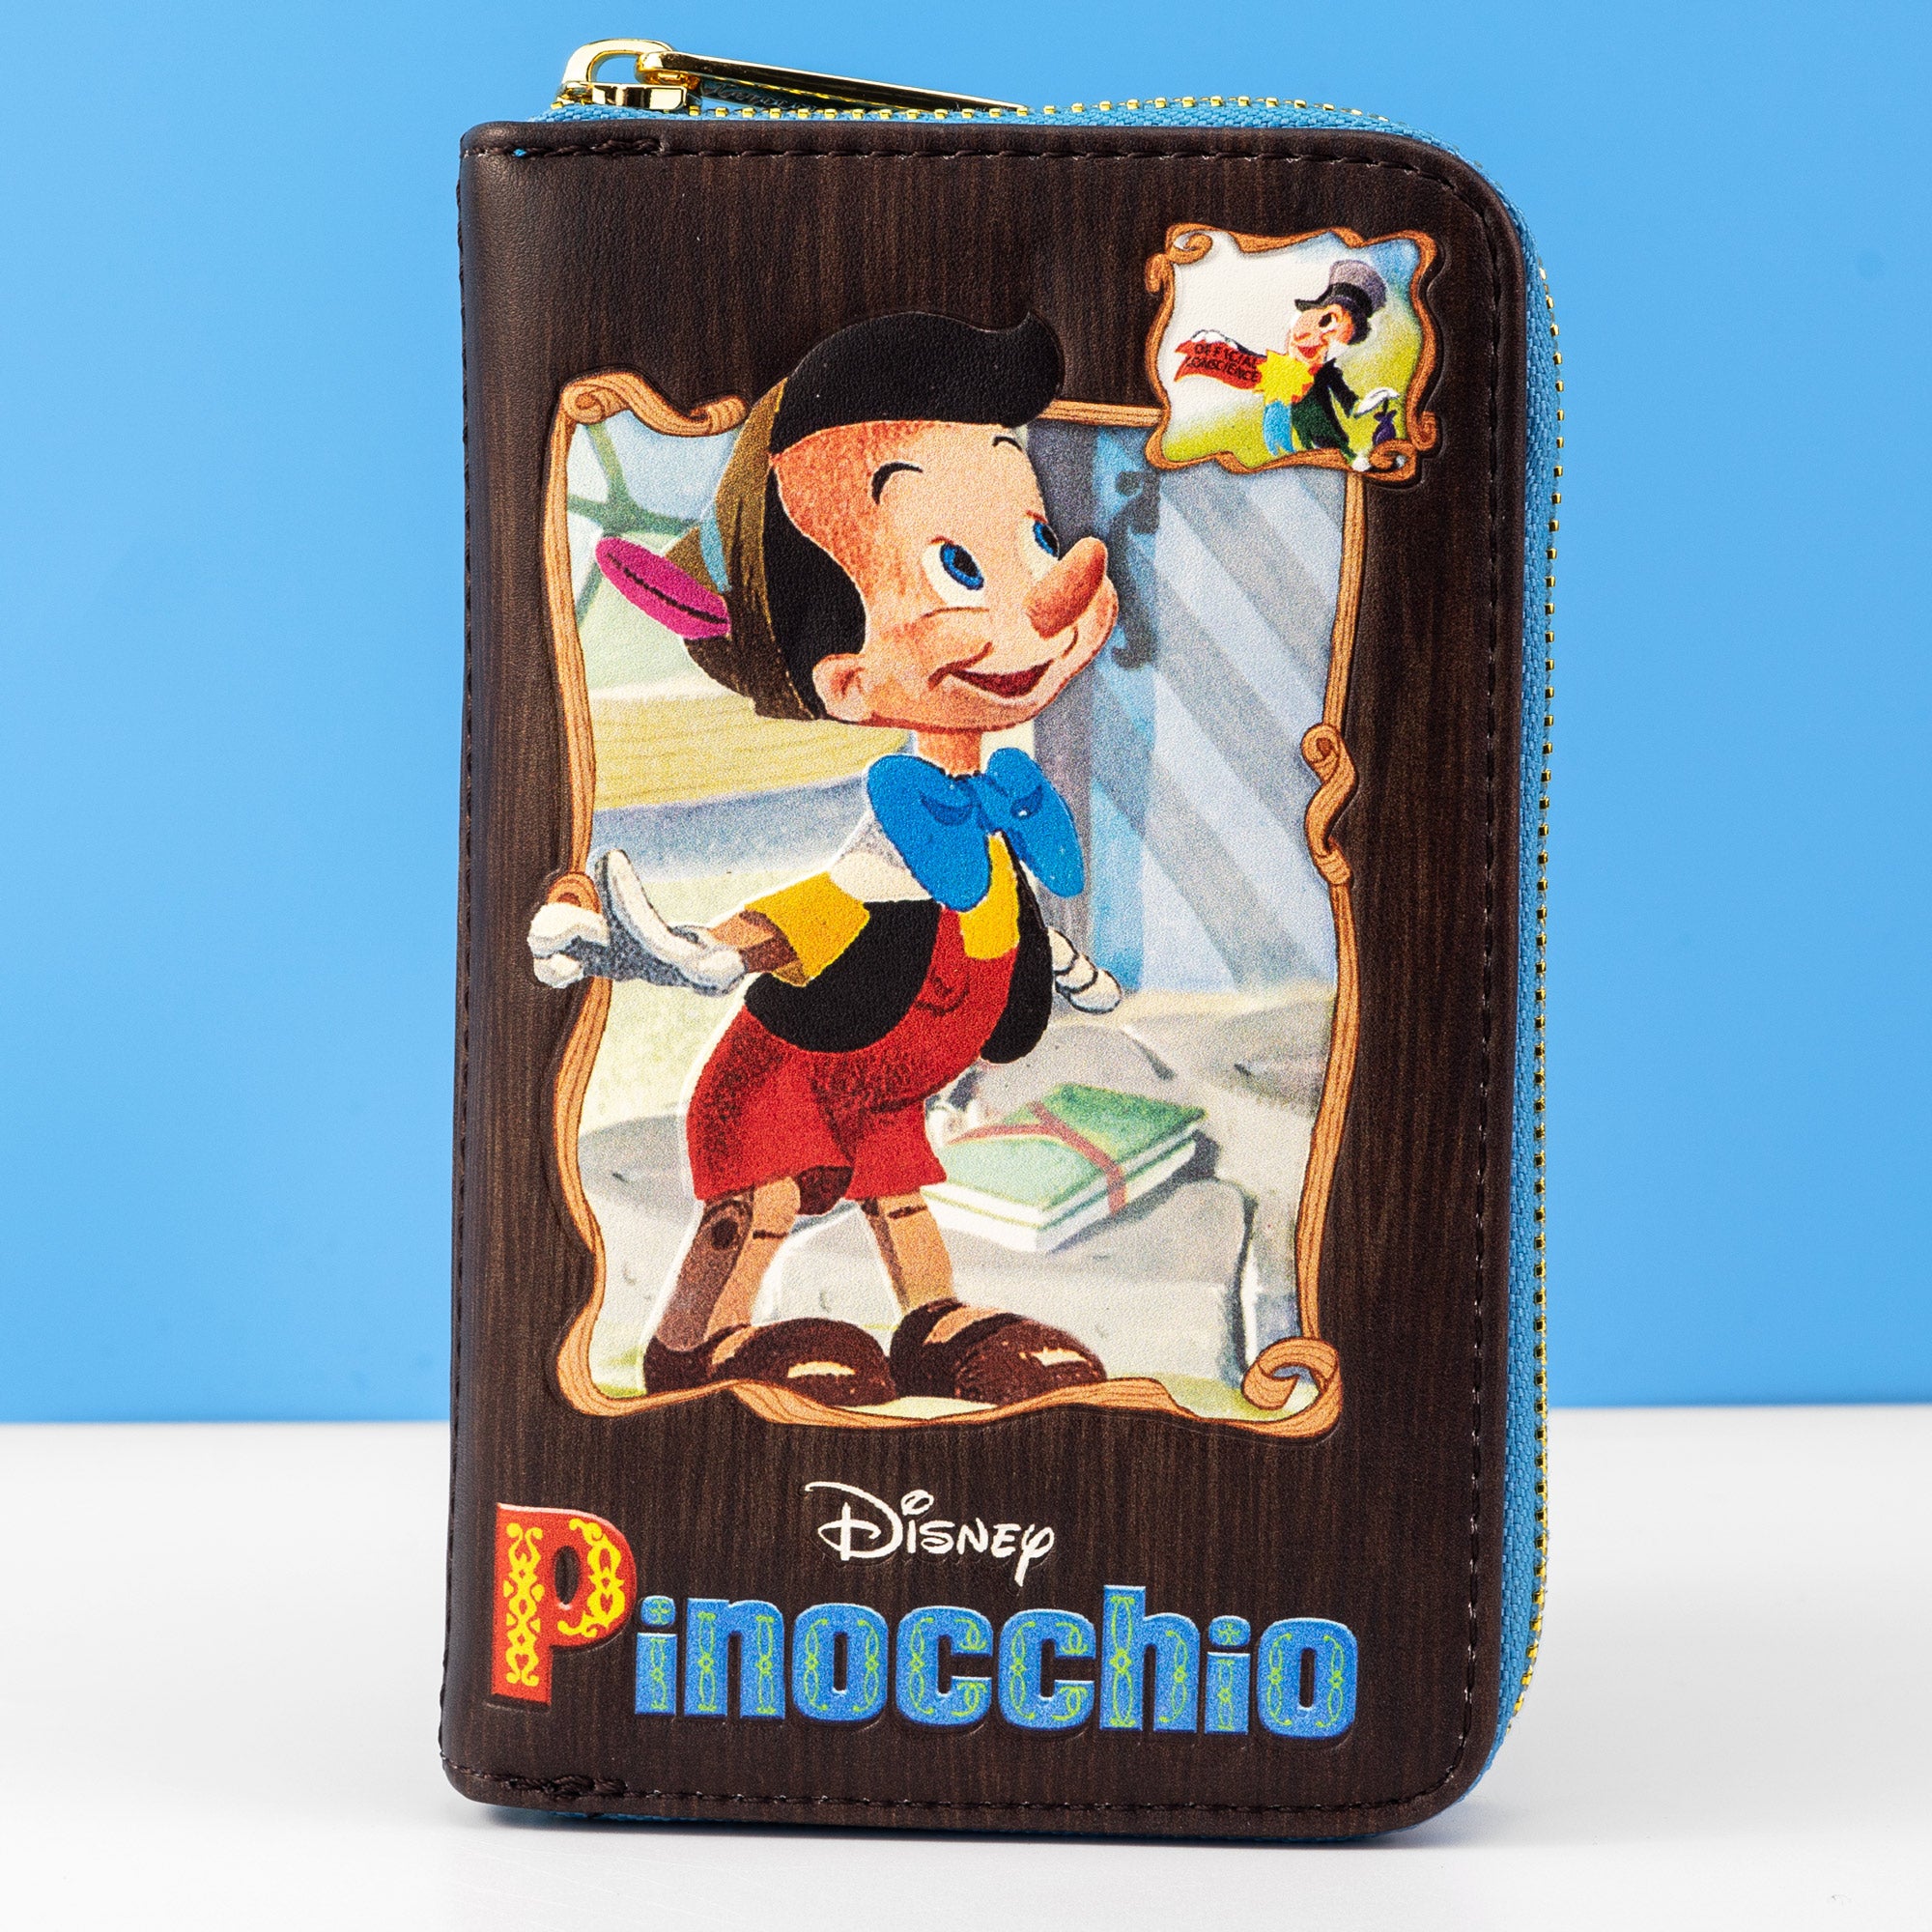 Loungefly x Disney Pinocchio Book Purse